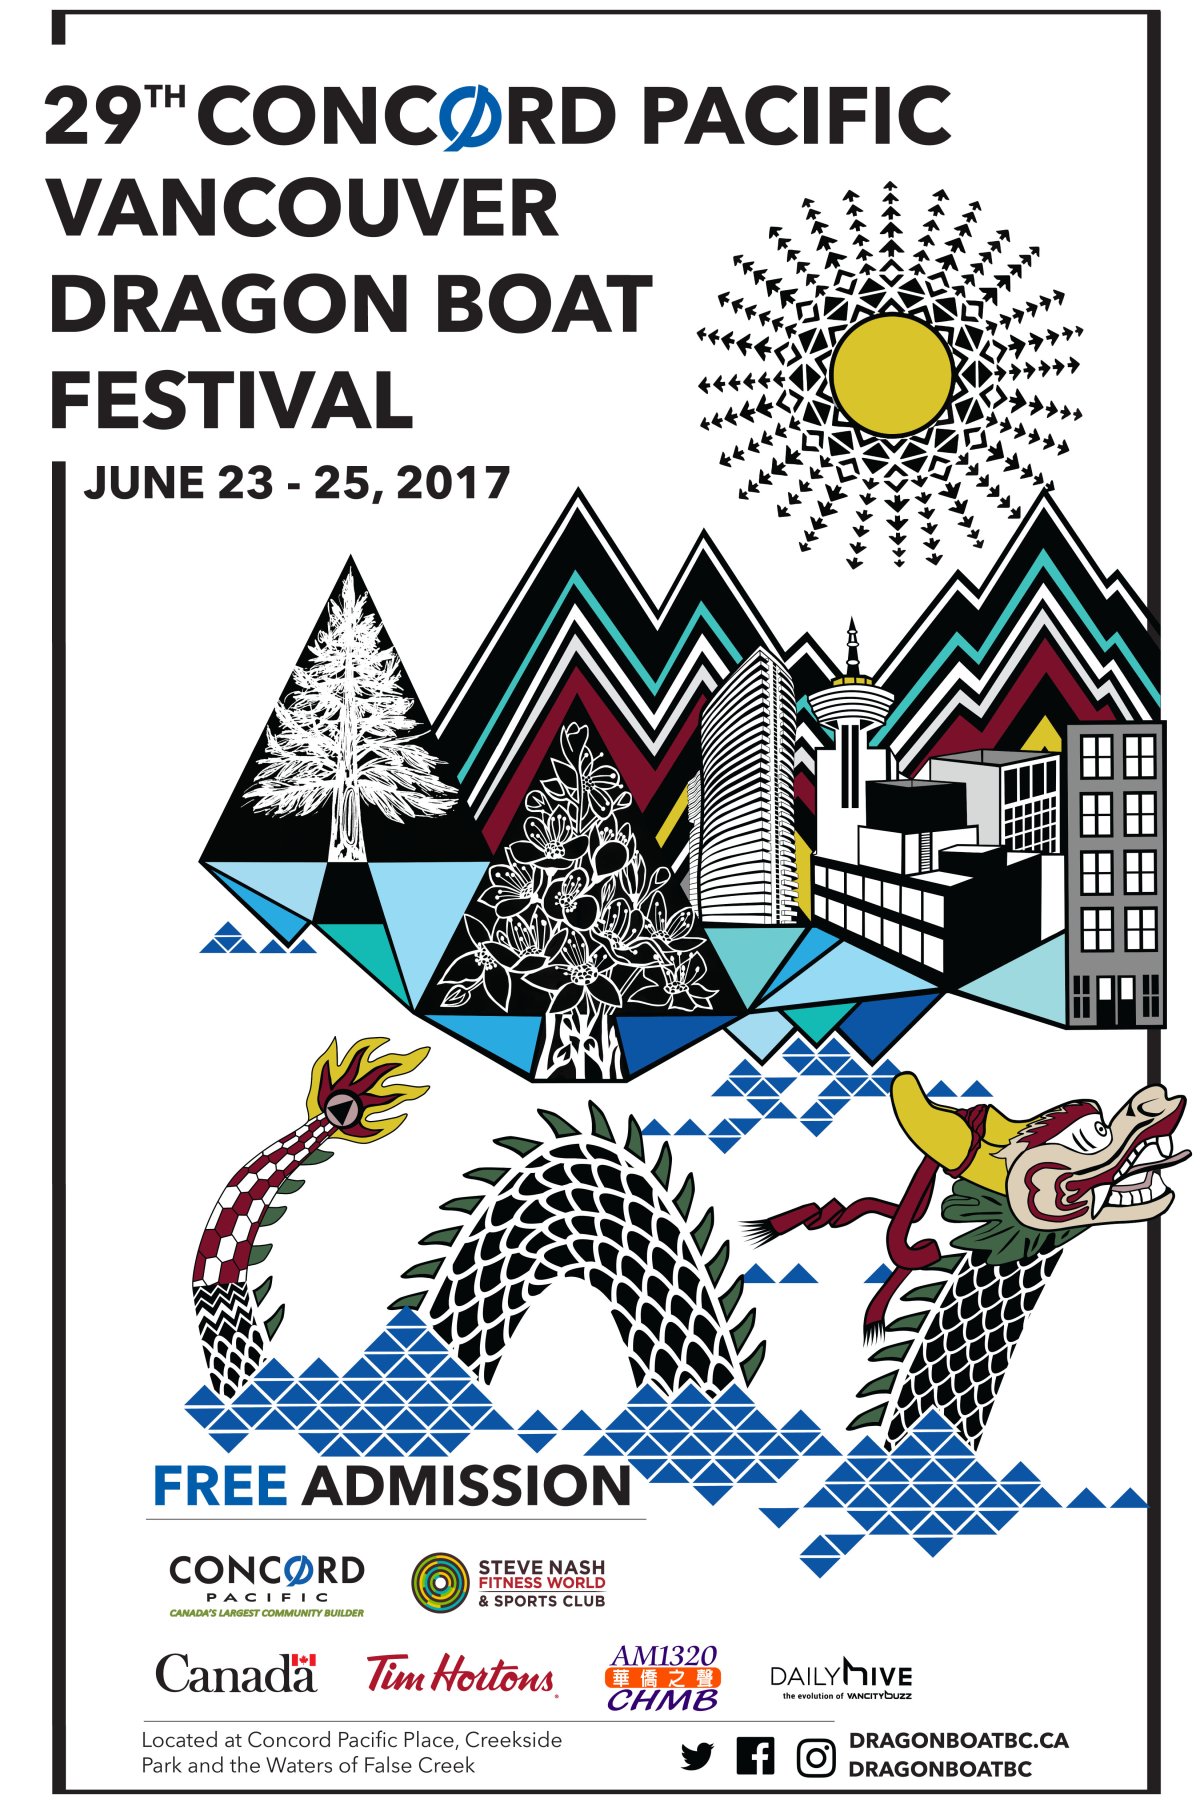 Concord Pacific Vancouver Dragon Boat Festival GlobalNews Events